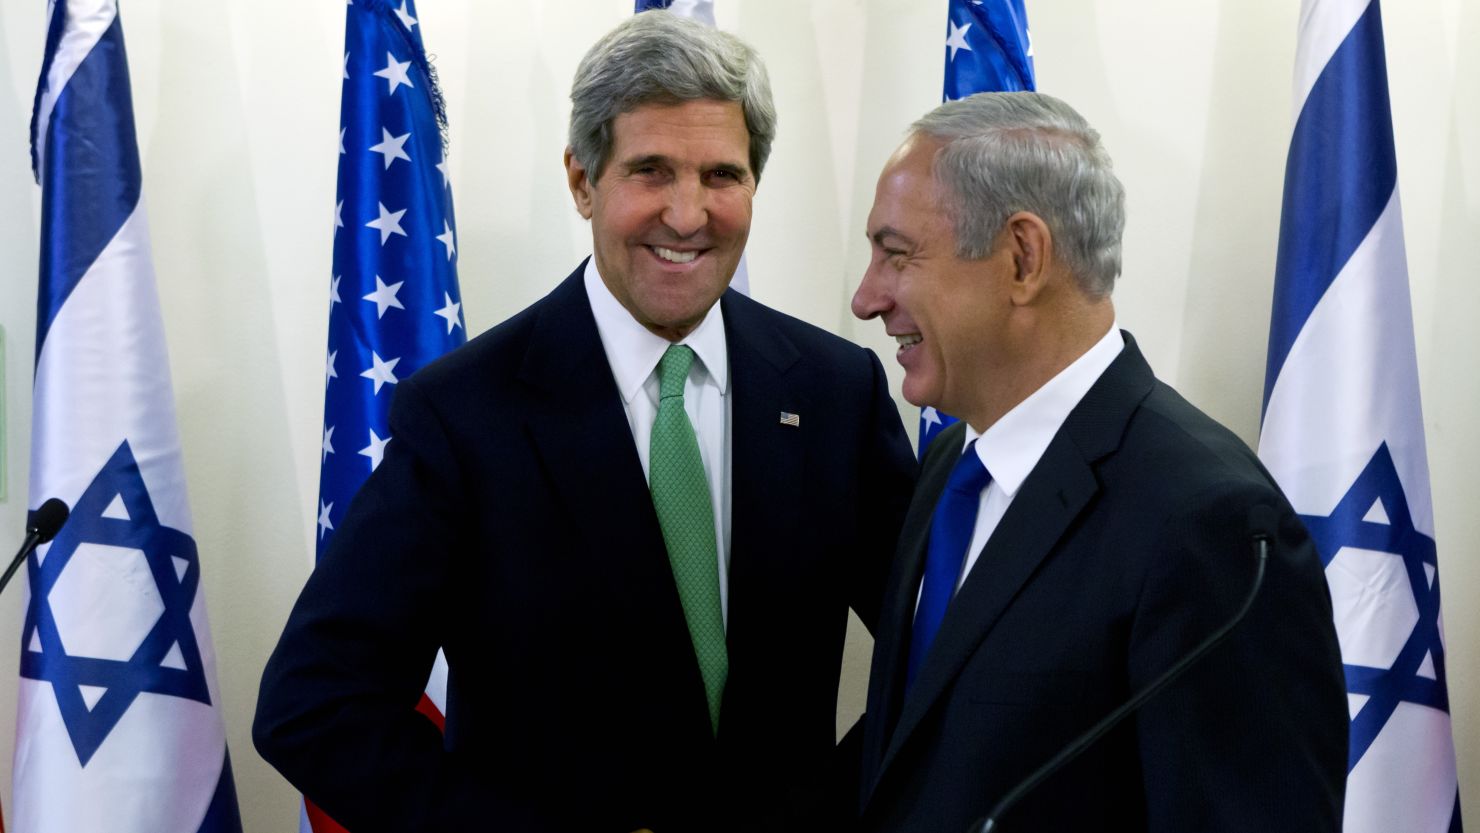 U.S. Secretary of State John Kerry (L) and Israeli PM Benjamin Netanyahu on September 15, 2013 in Jerusalem, Israel.